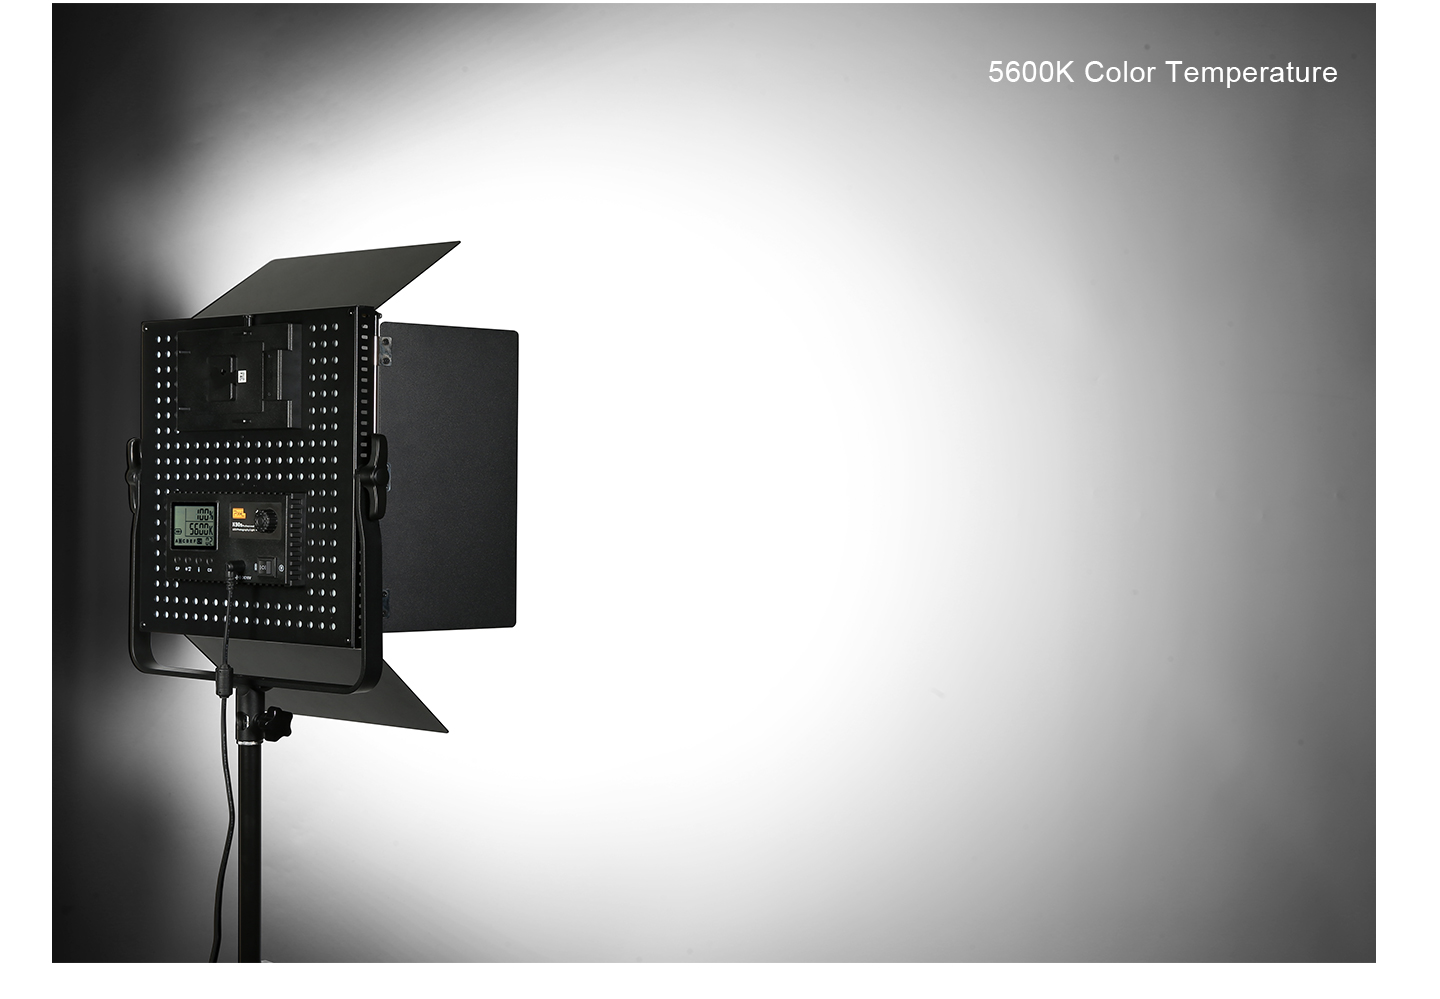 5600K Color Temperature